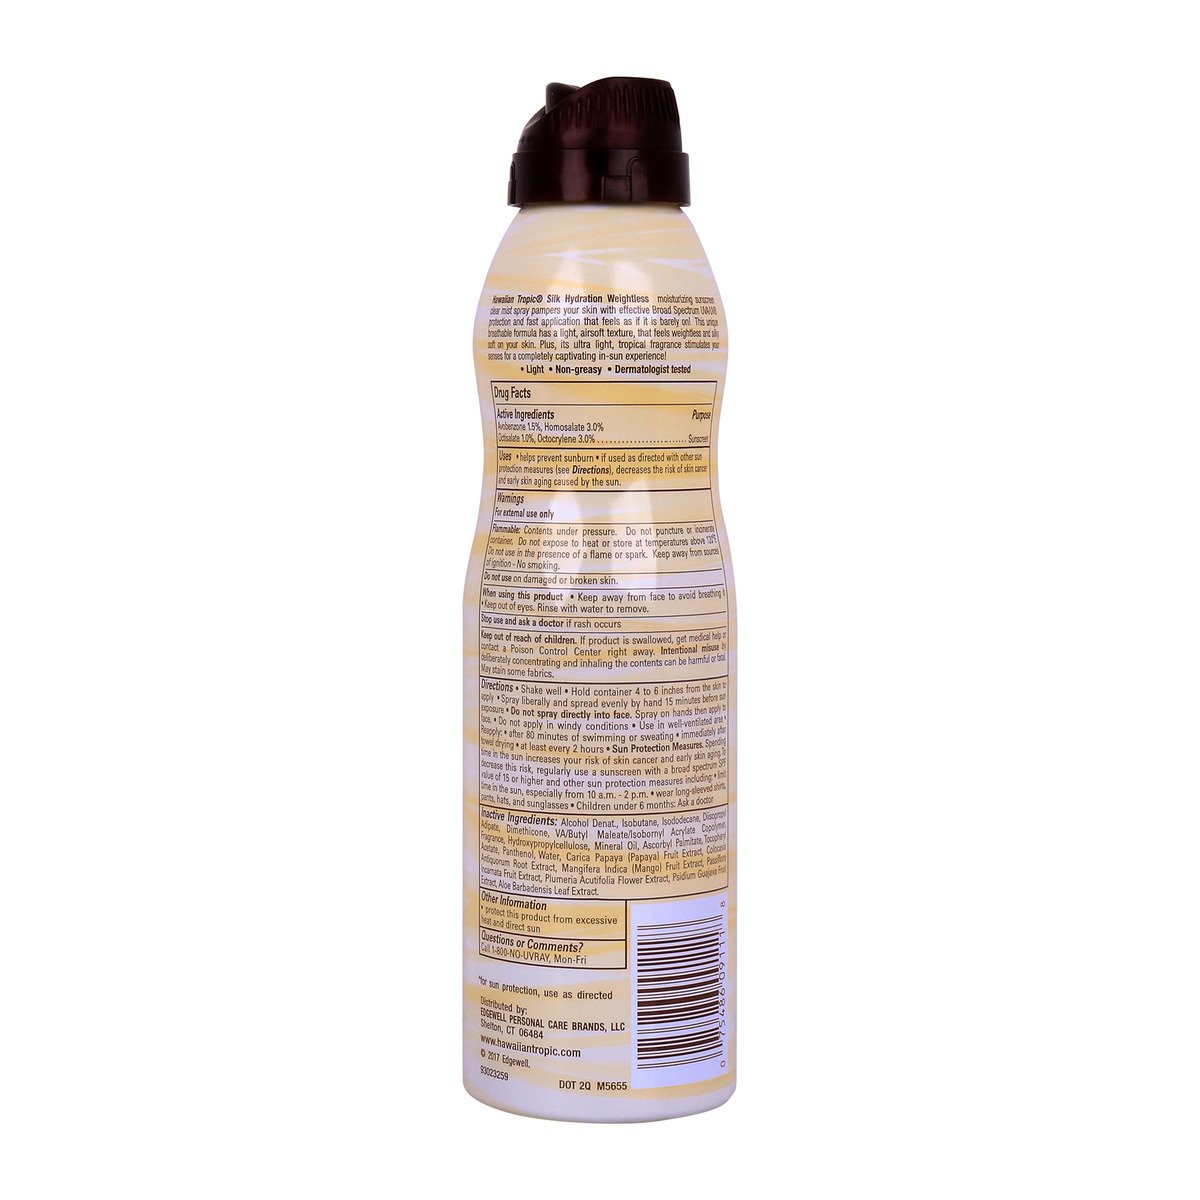 Hawaiian Tropic Silk Hydration Clear Spray Sunscreen SPF 15, 170 g